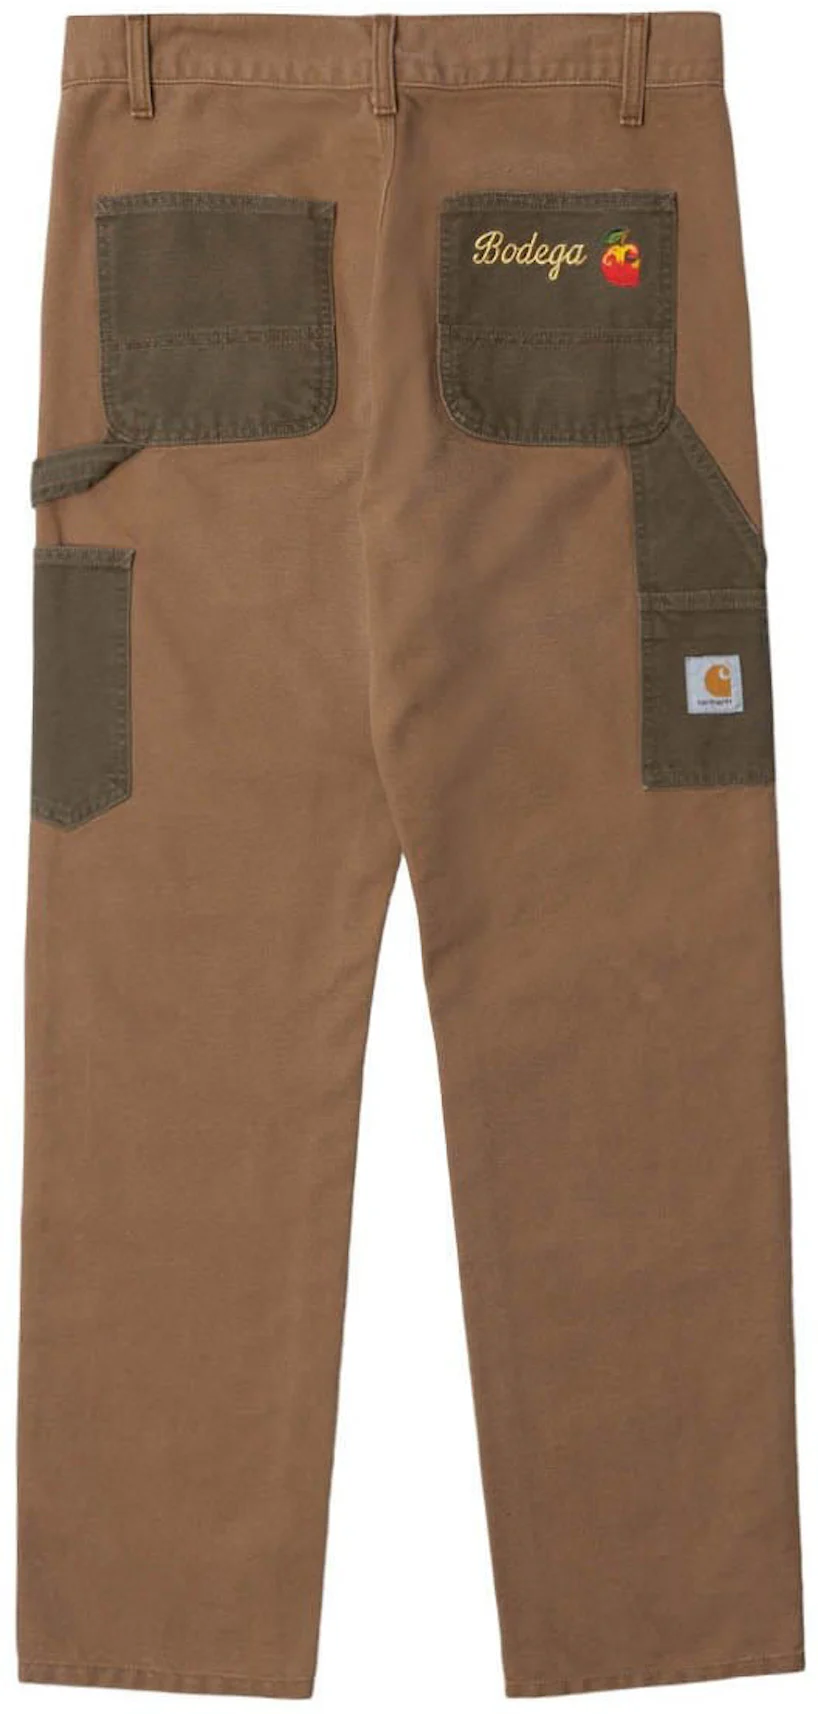 Carhartt WIP F/W 21 Cargo Pants